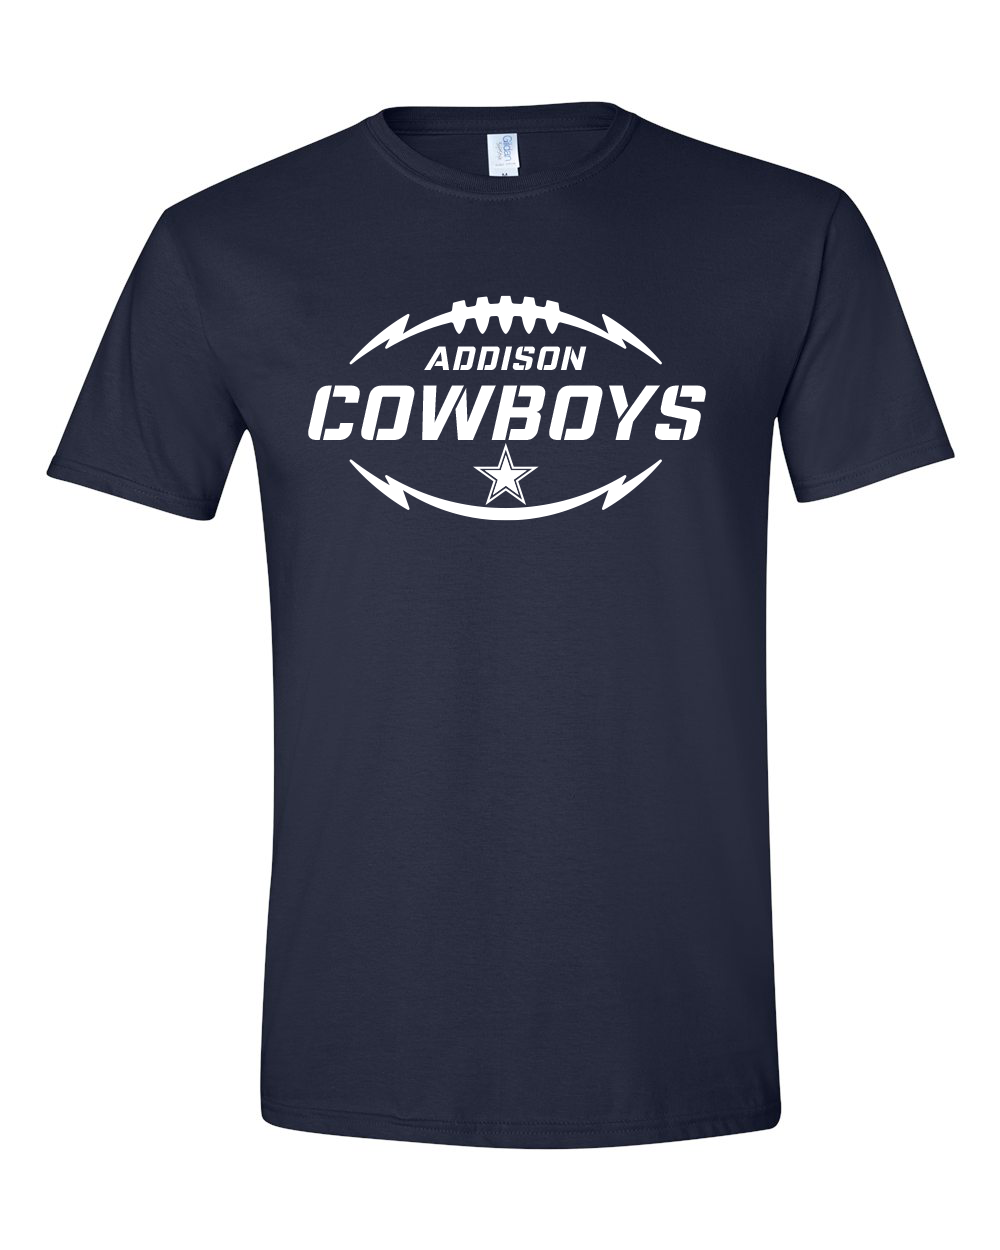 New Addison Cowboys - T-shirt - ADULT